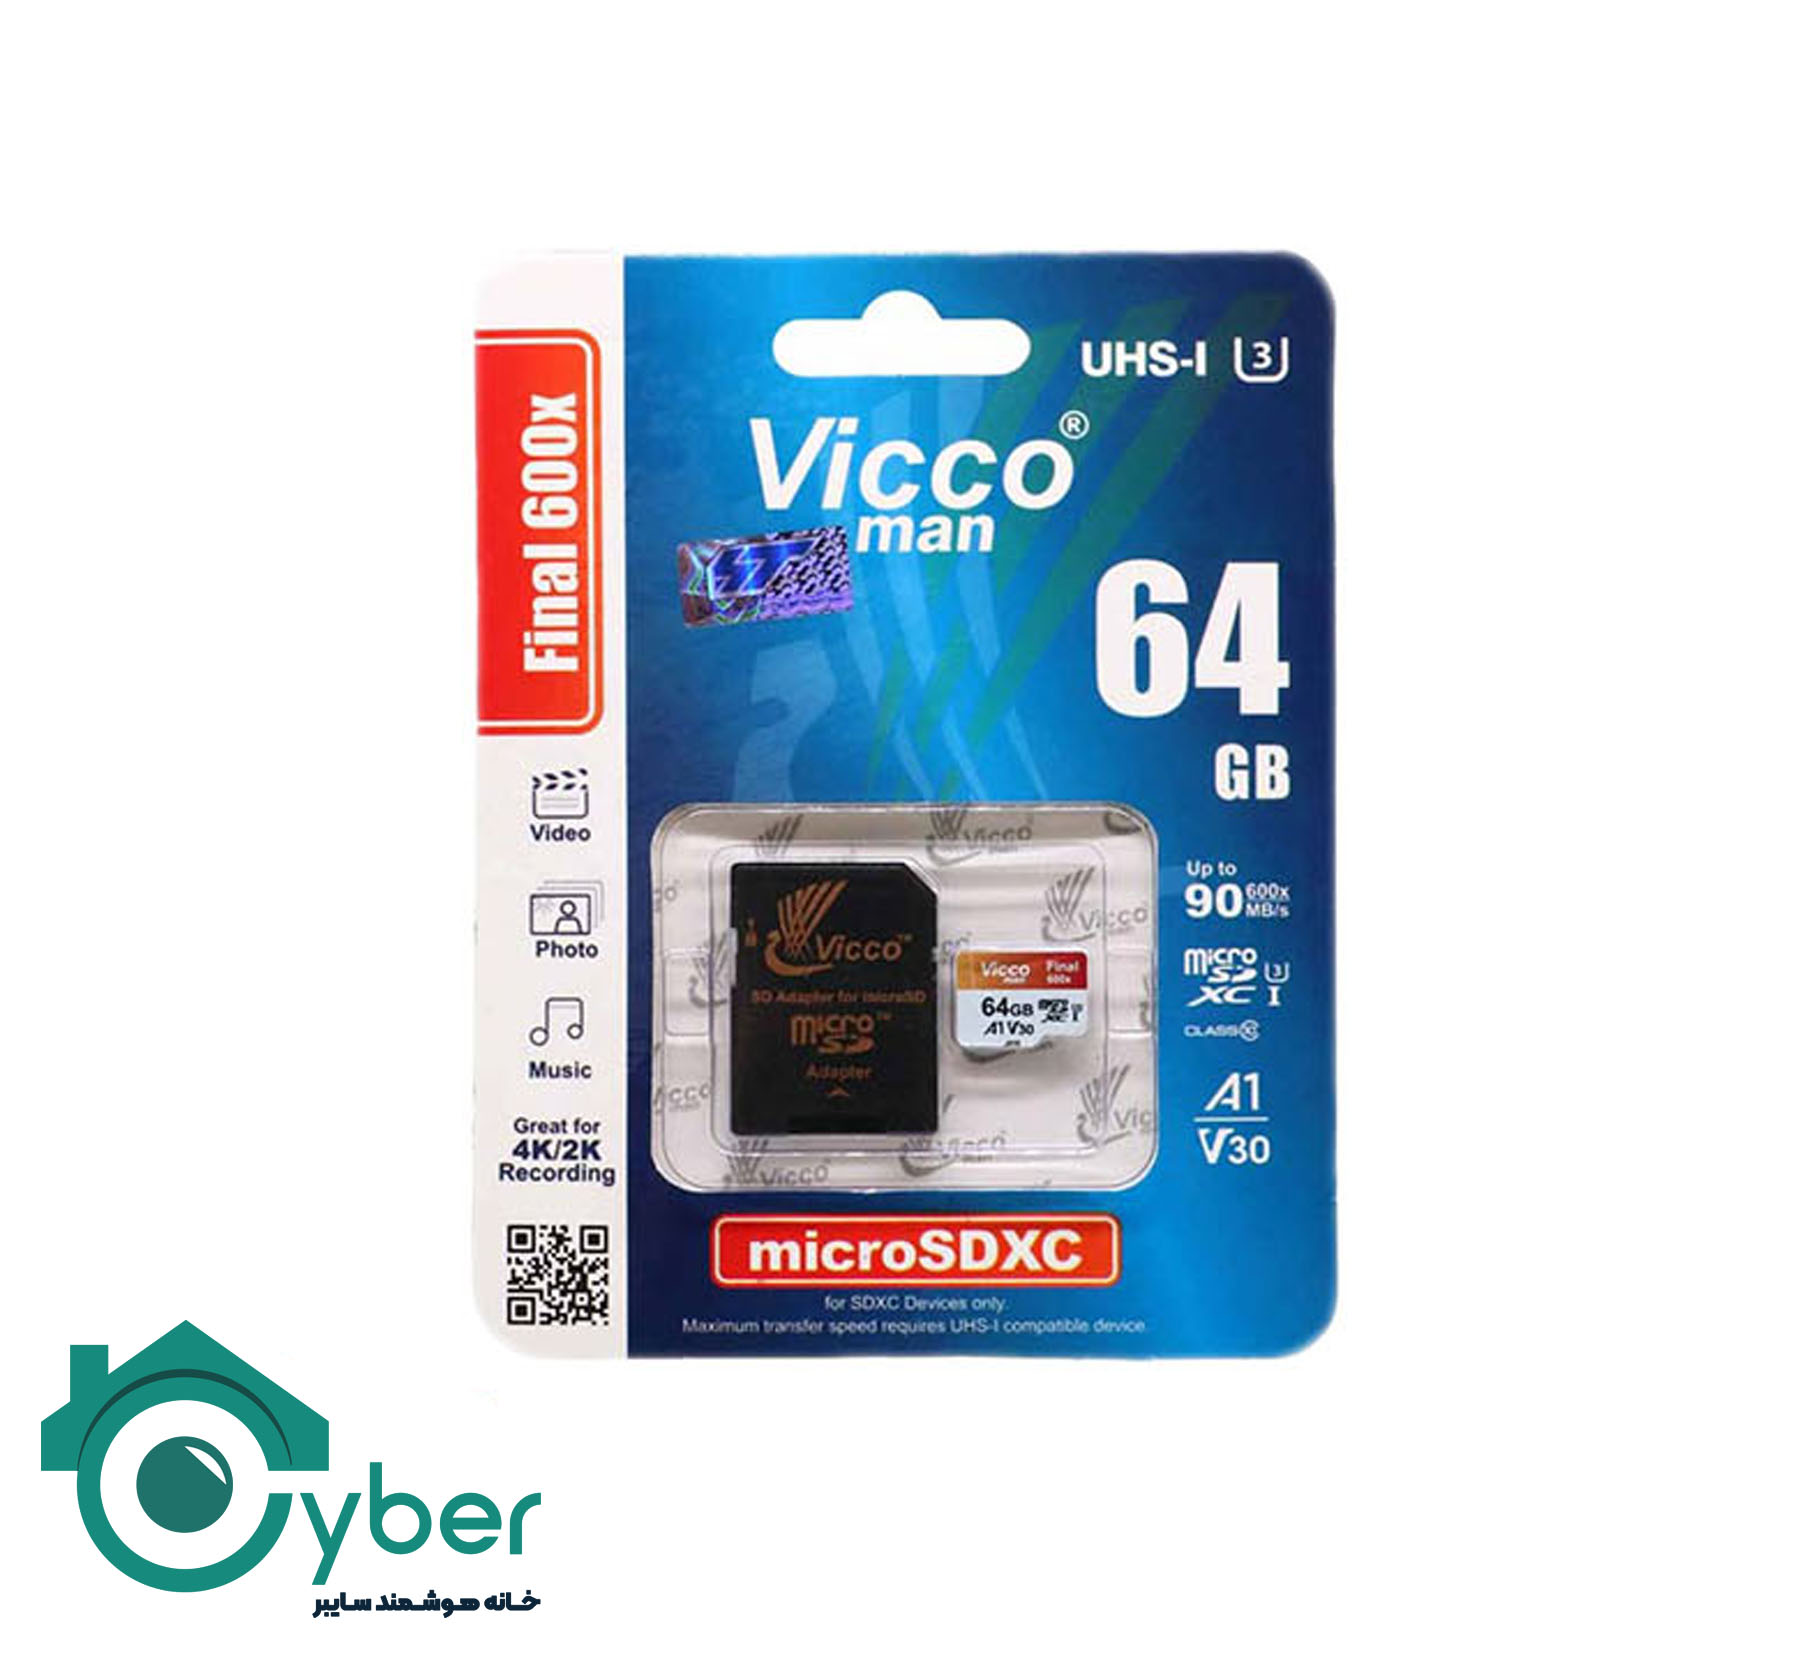 کارت حافظه(مموری کارت) 64 گیگابایت ویکومن - Vicco man